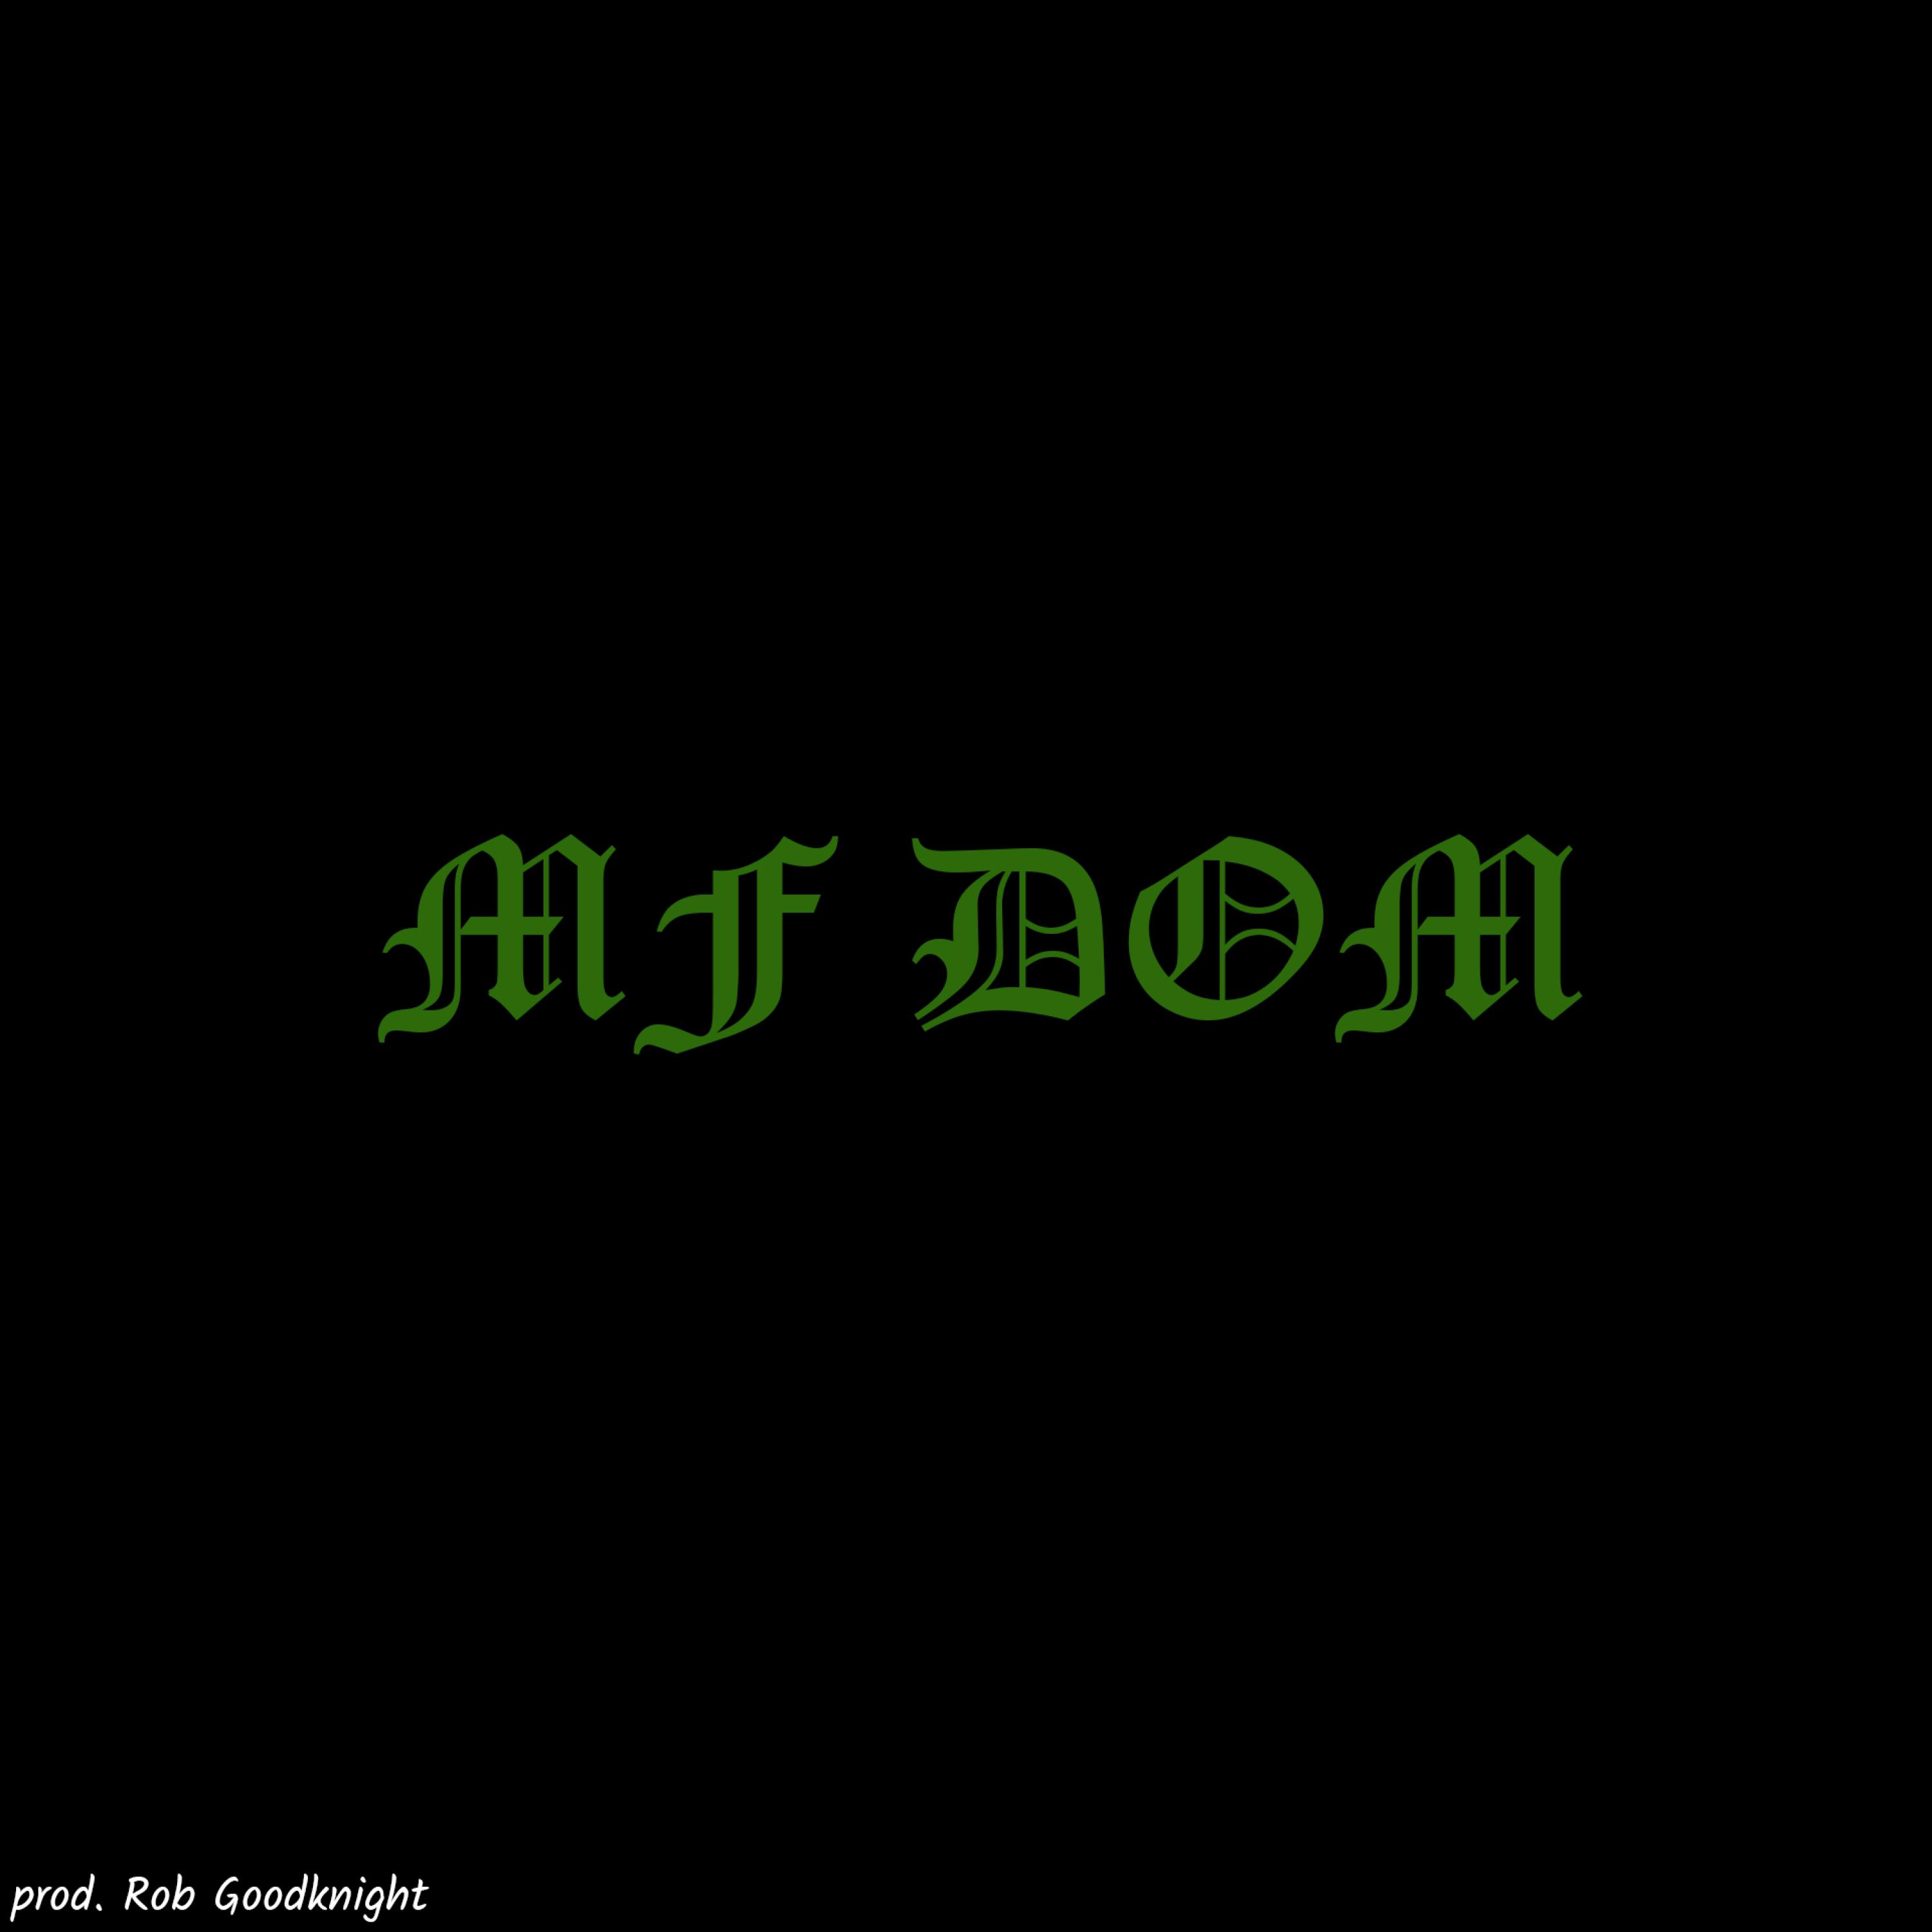 D.O.M of Dnd - MF DOM (feat. Rob Goodknight)